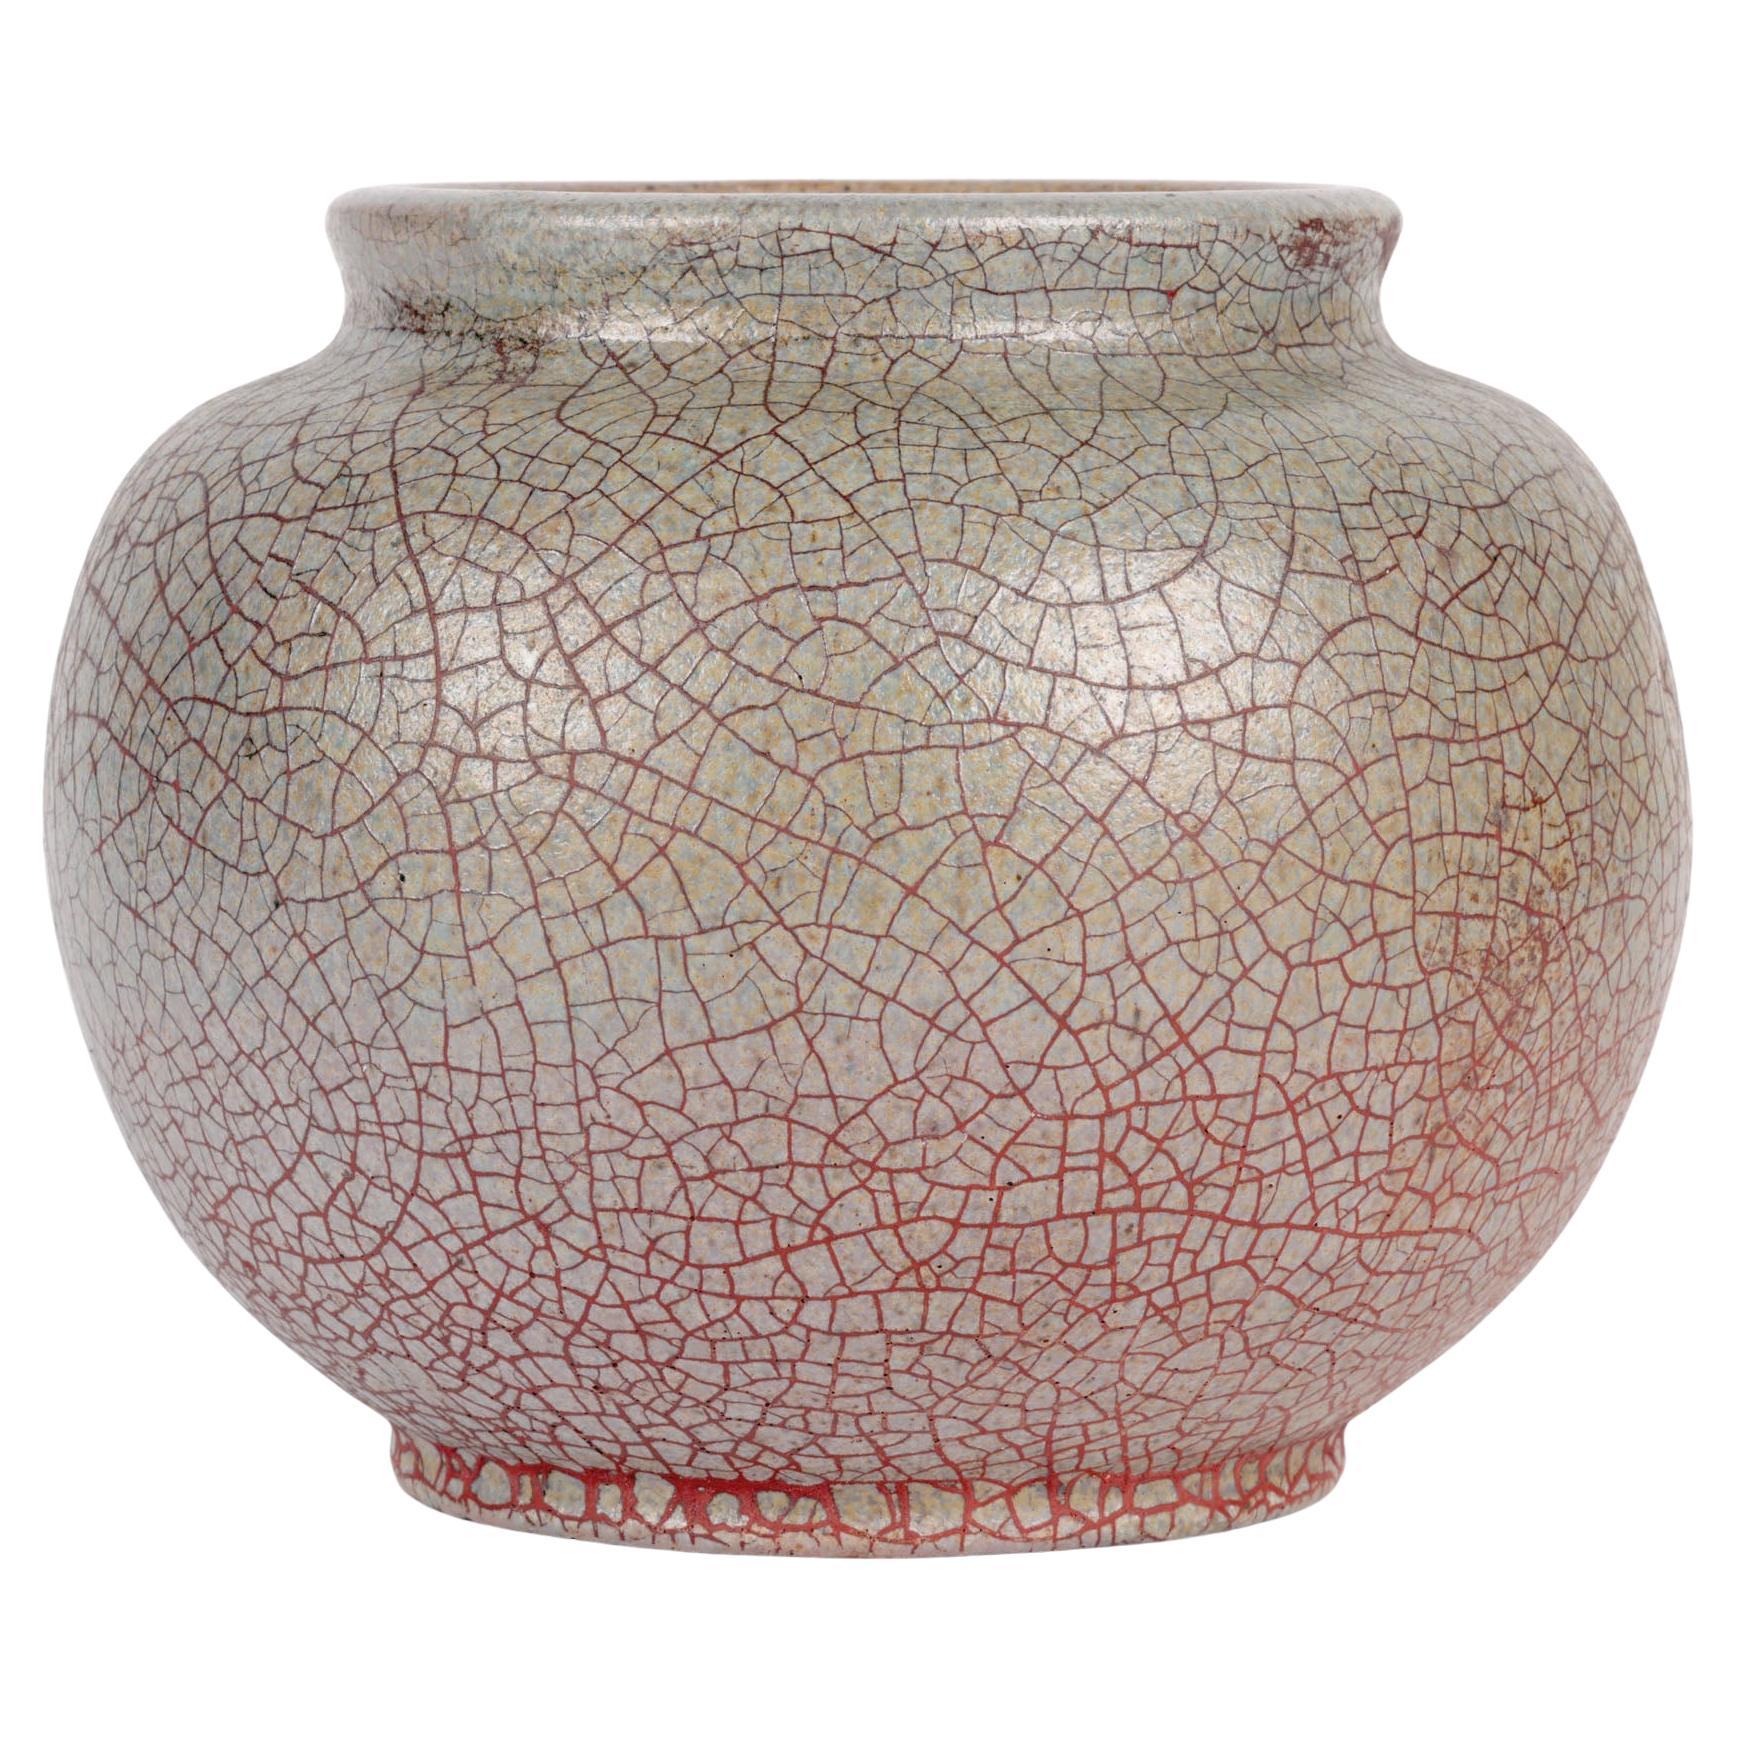 Otto Lindig German Bauhaus Studio Pottery Vase